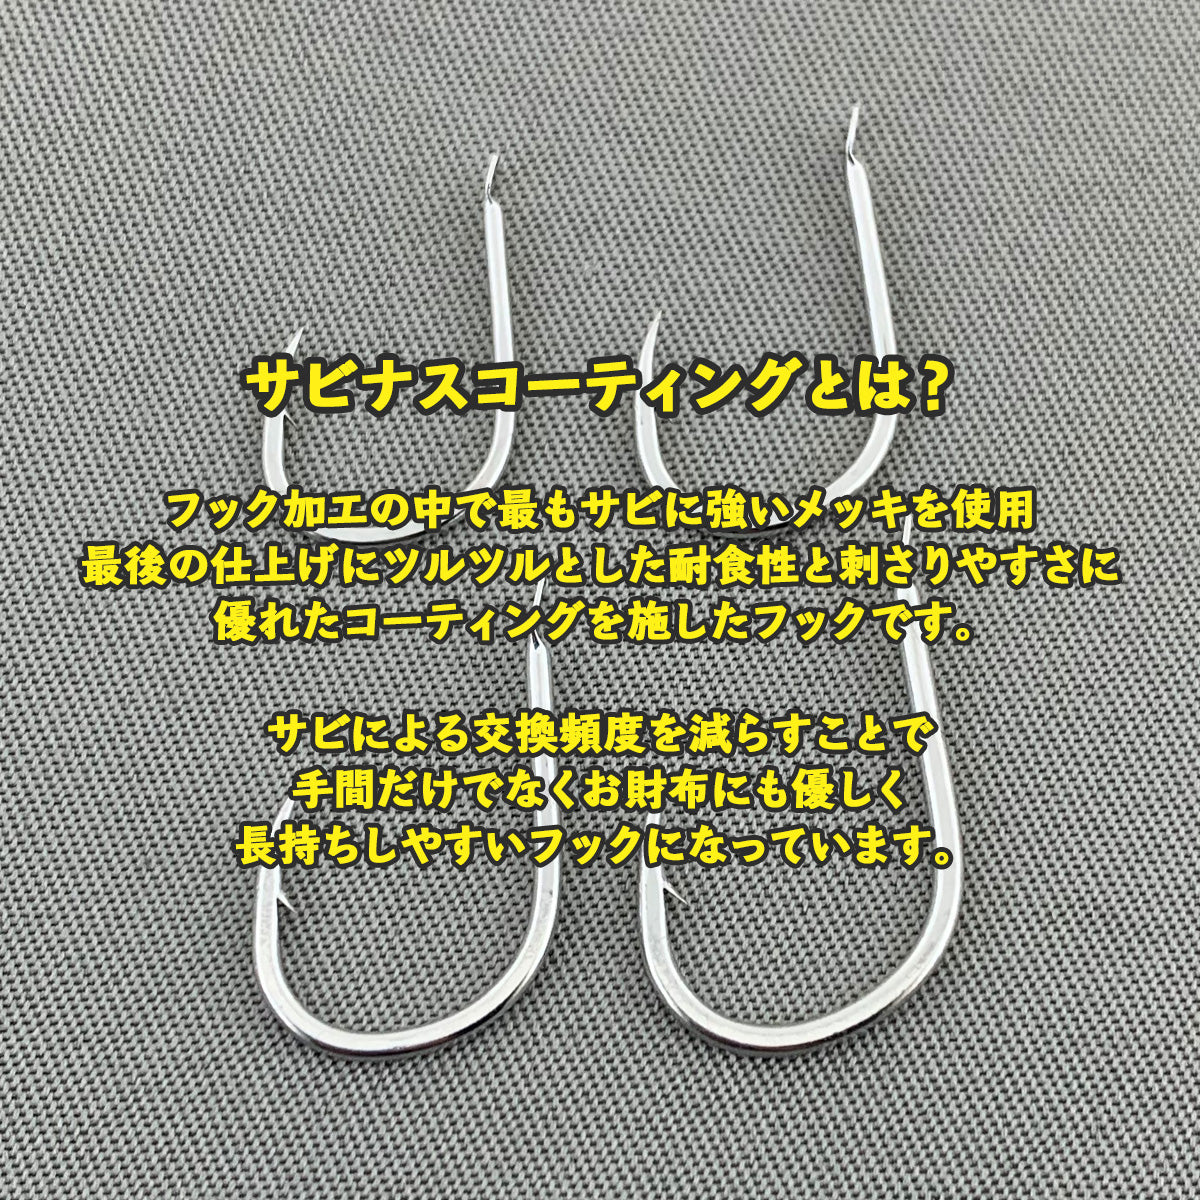 UMINO (ウミノ) タイラバ アツモリシングルカーリー 3本フック 3セット入 ネクタイ